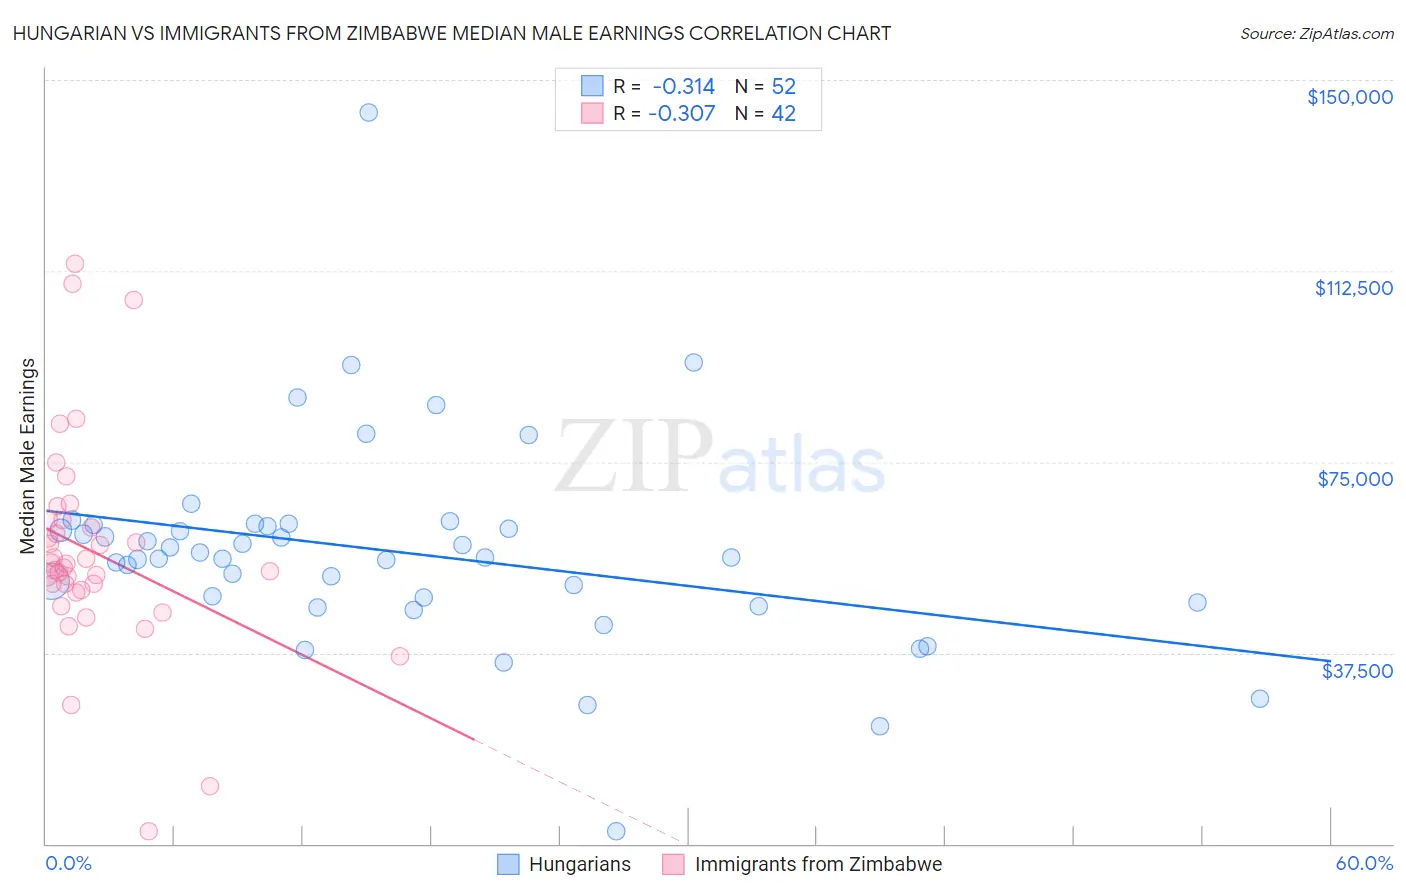 Hungarian vs Immigrants from Zimbabwe Median Male Earnings